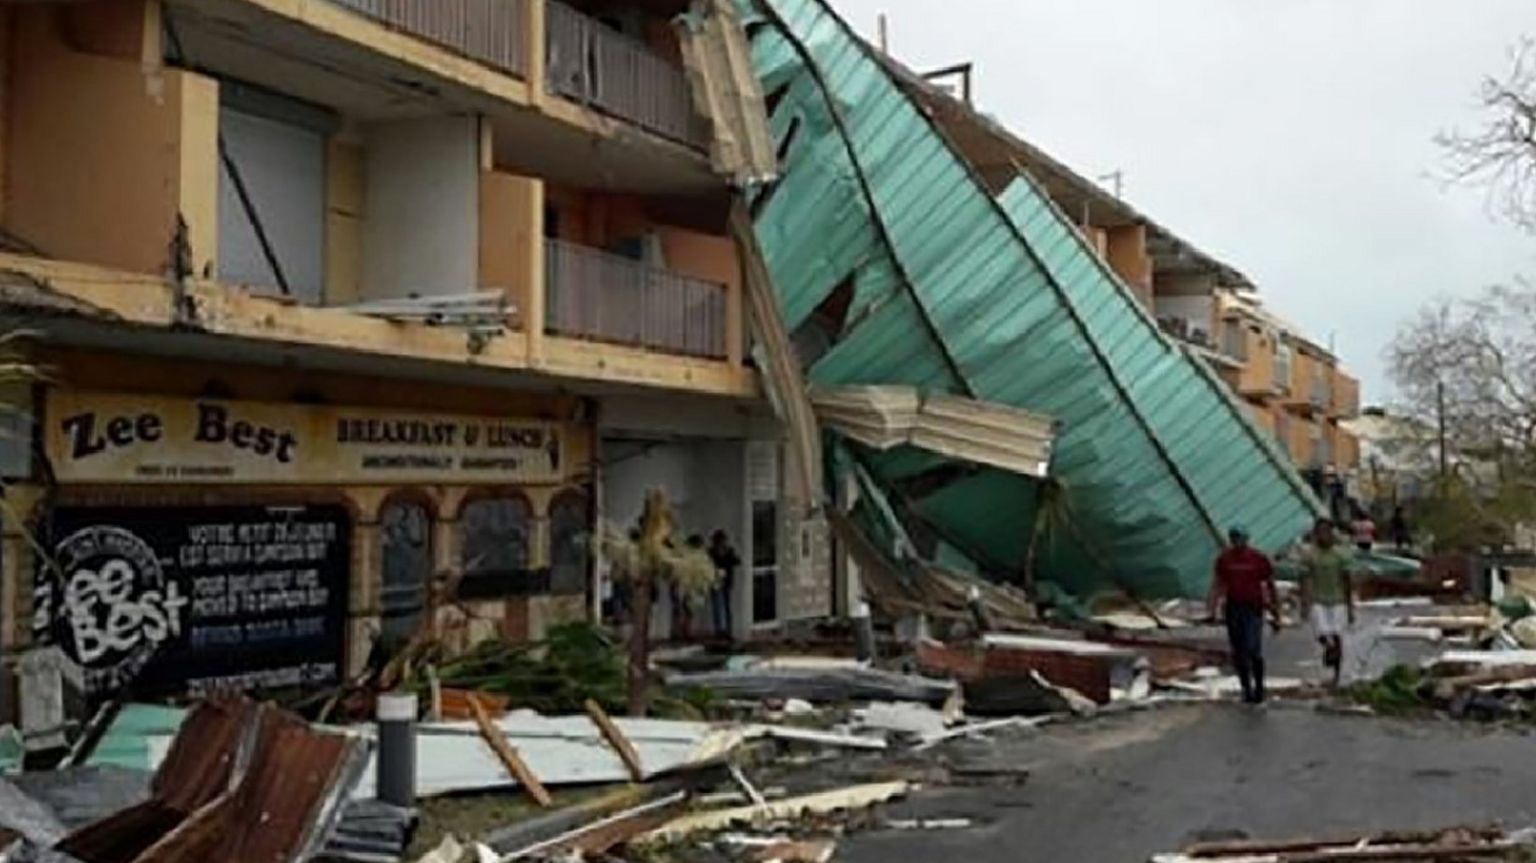 St Martin damaged from Hurricane Irma